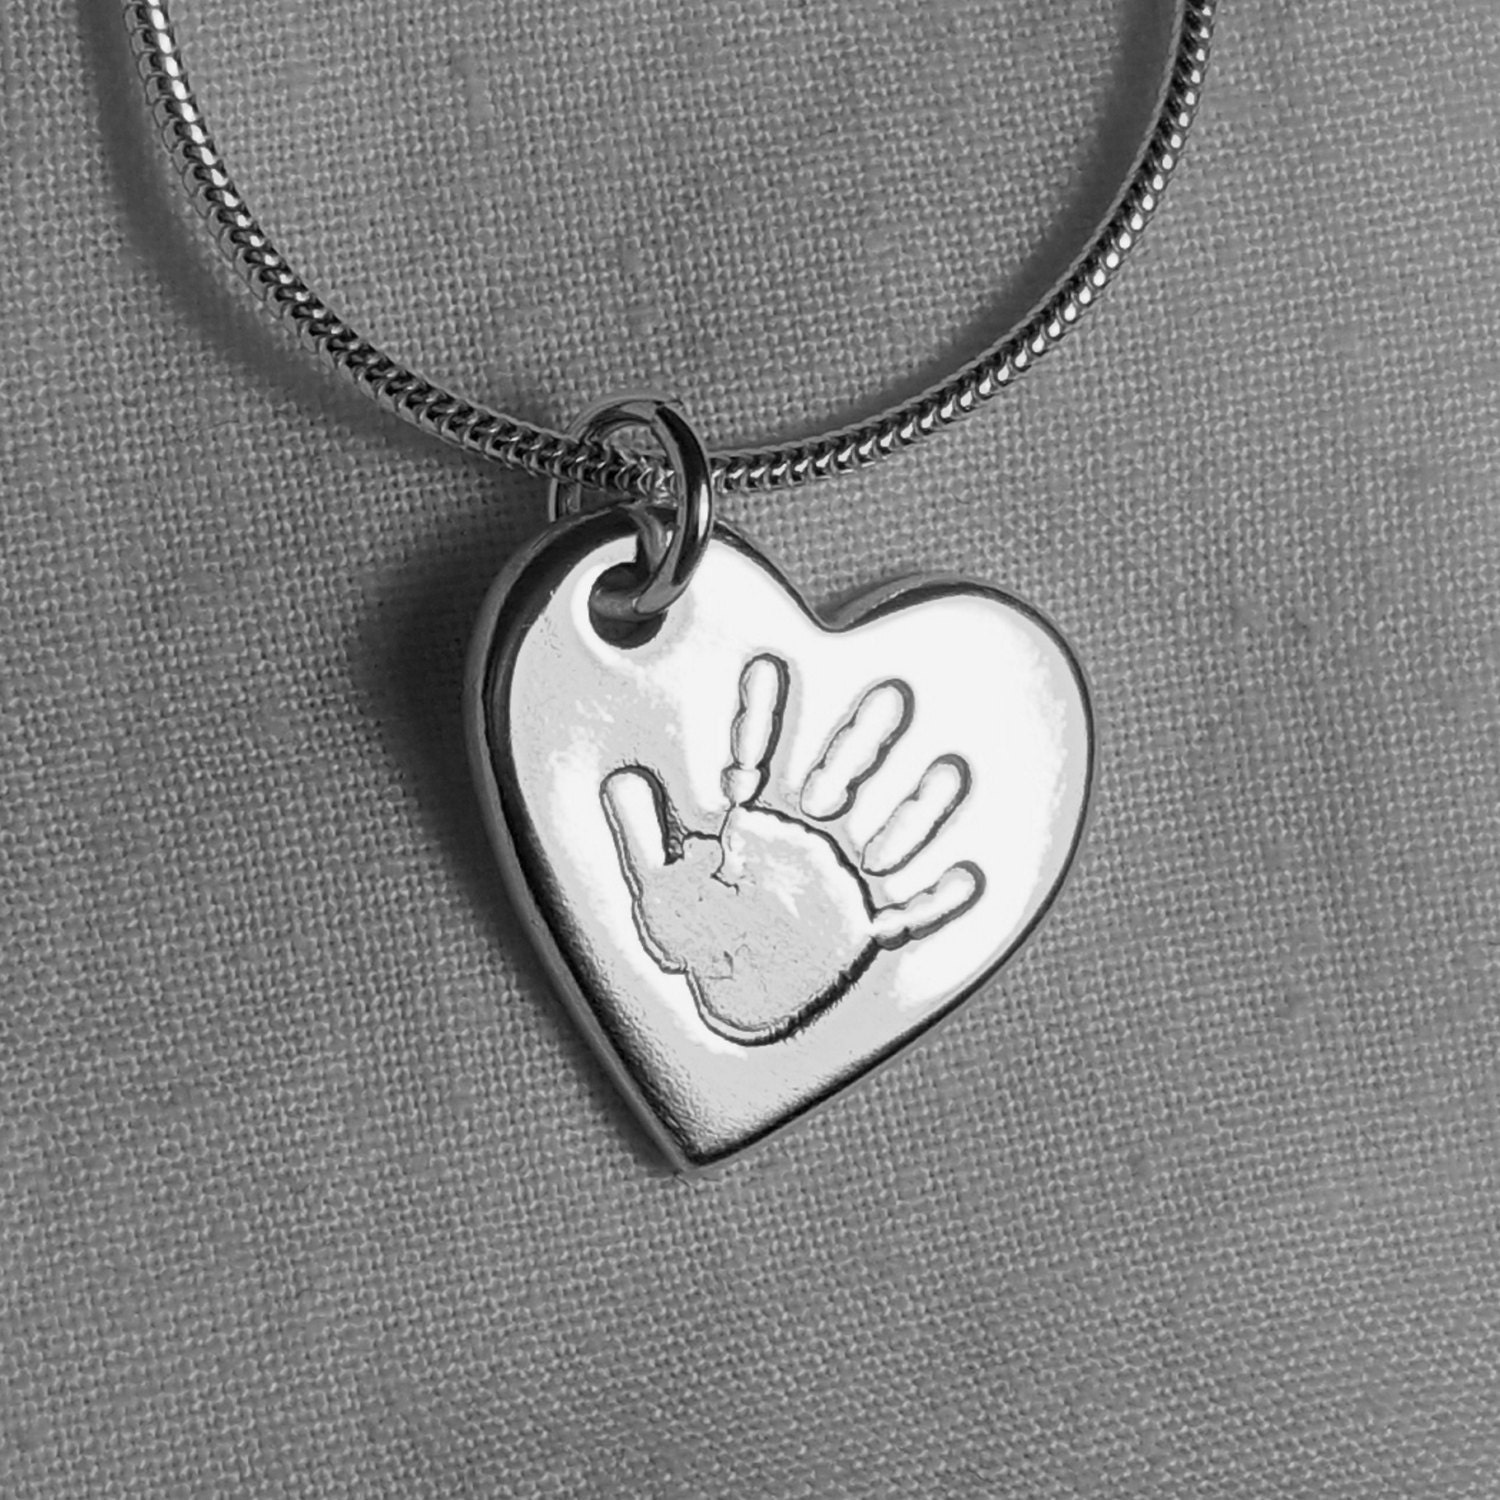 Handprint Necklace Personalized Silver Footprint Handprint Jewellery Chain Pendant Charm